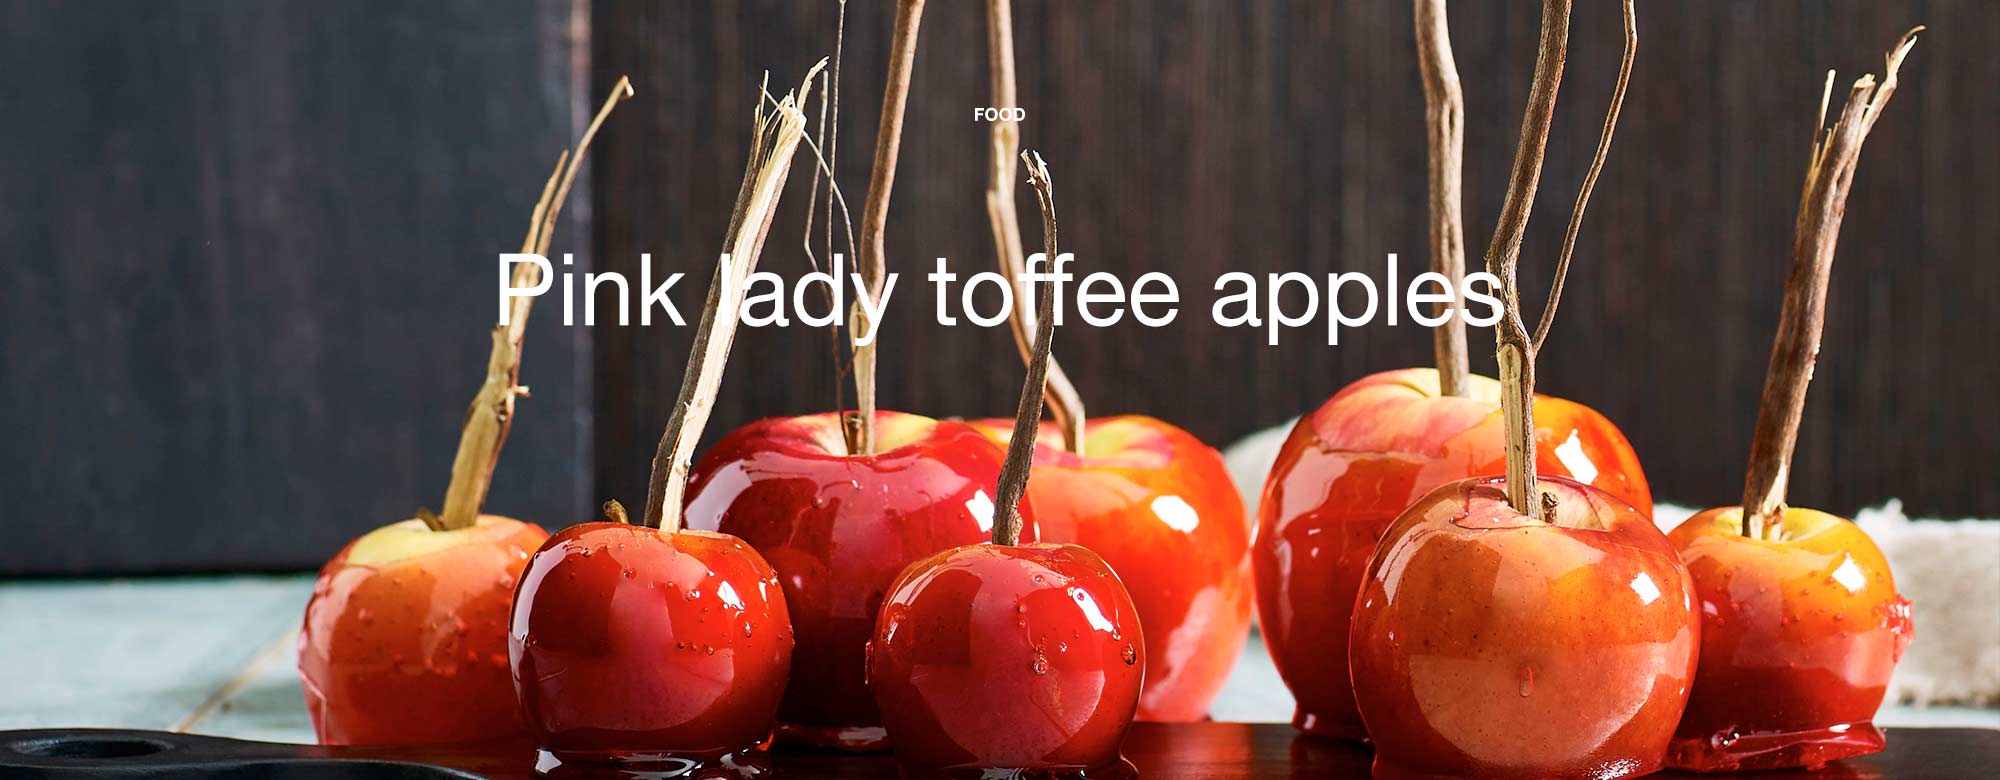 Pink lady toffee apples